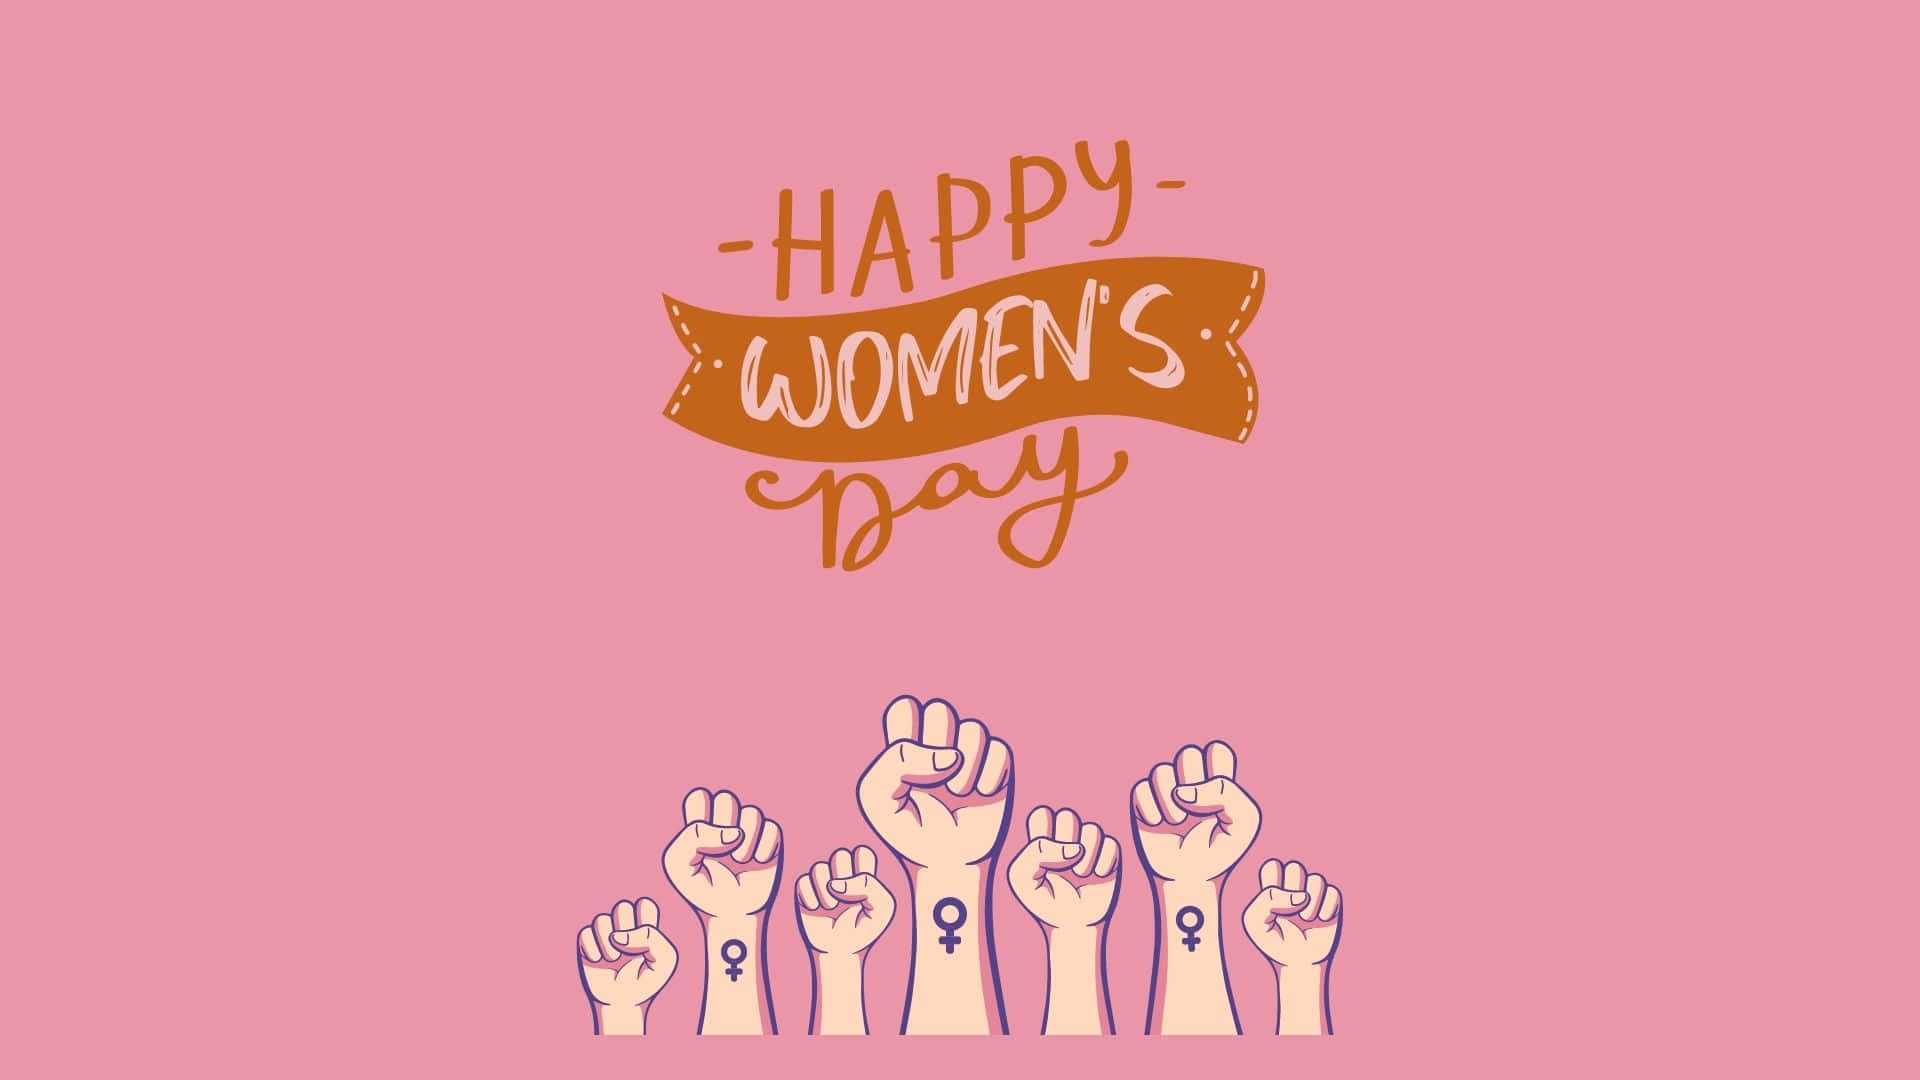 International Women's Day Wallpaper